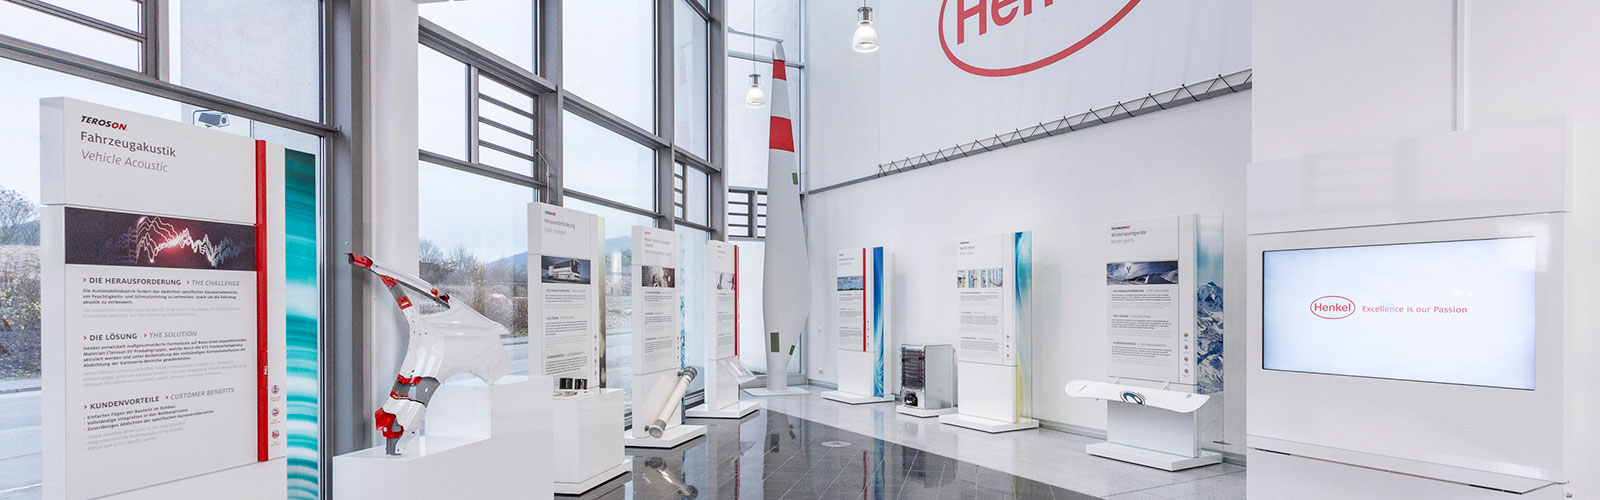 Braunwagner customer journey Henkel adhesives 2016